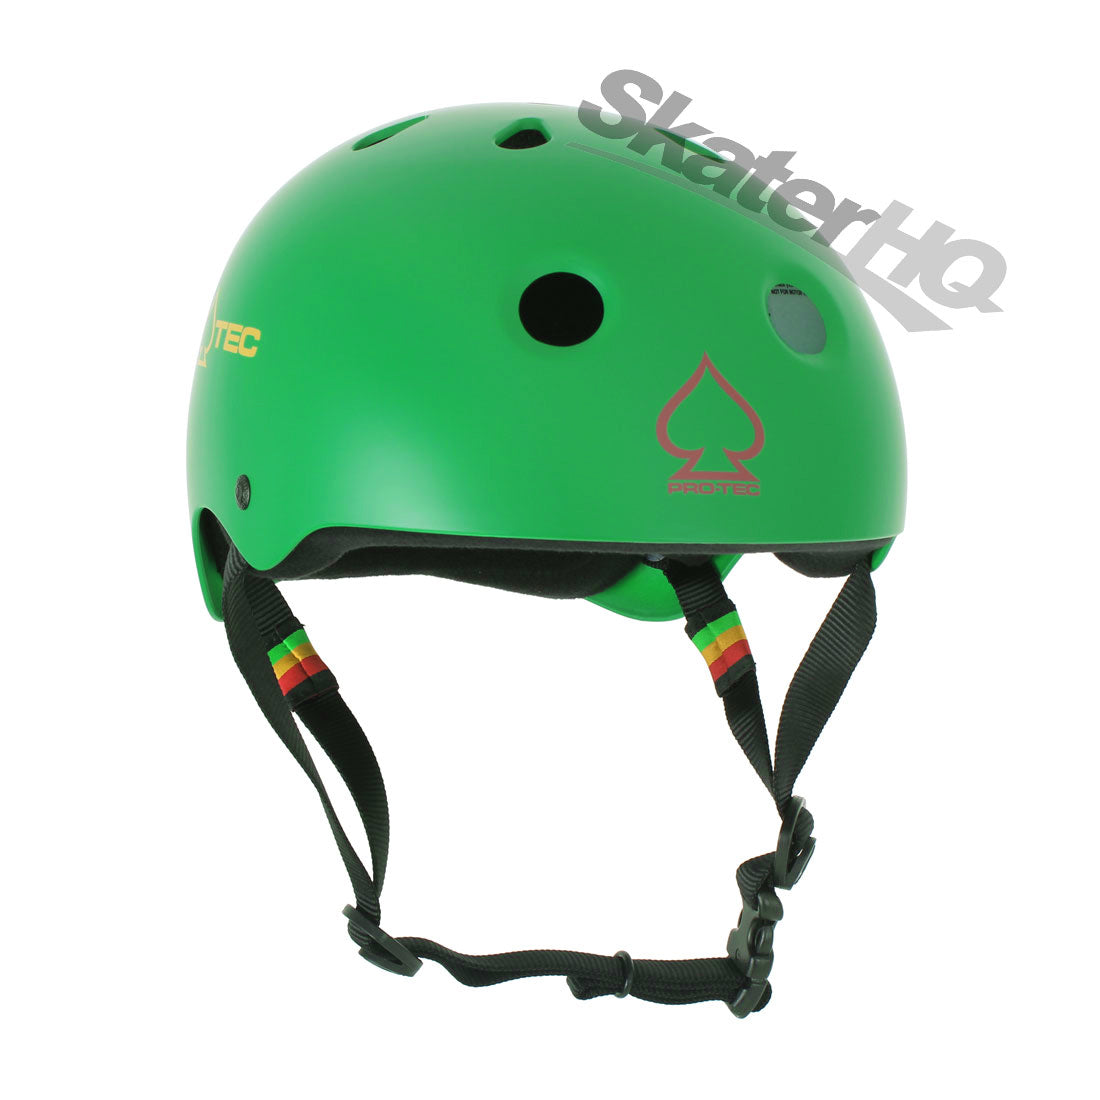 Pro-Tec Classic Skate Matte Rasta Green - Medium Helmets